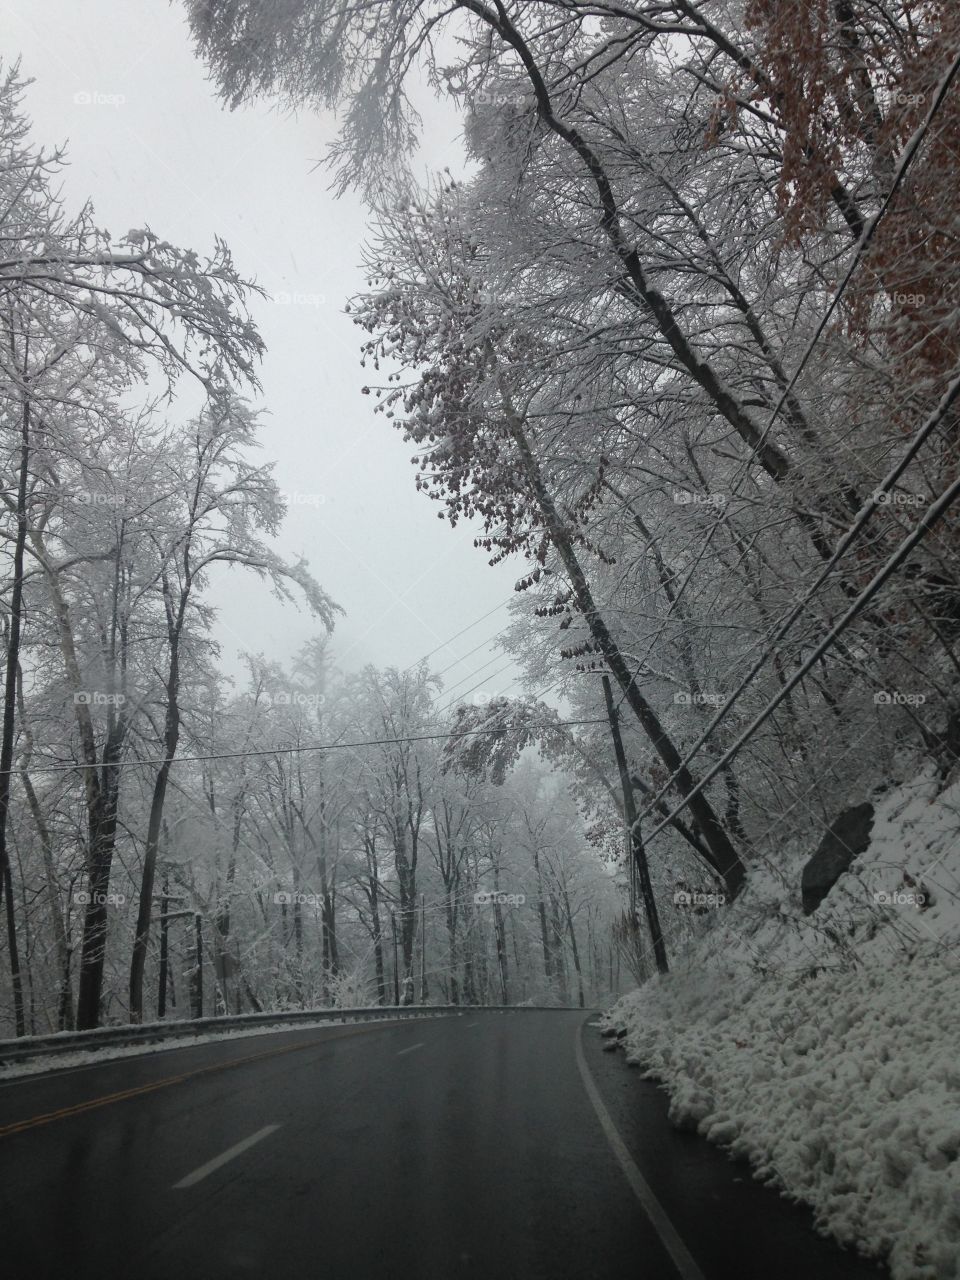 Snowy Pass. Driving through Pennsylvania 